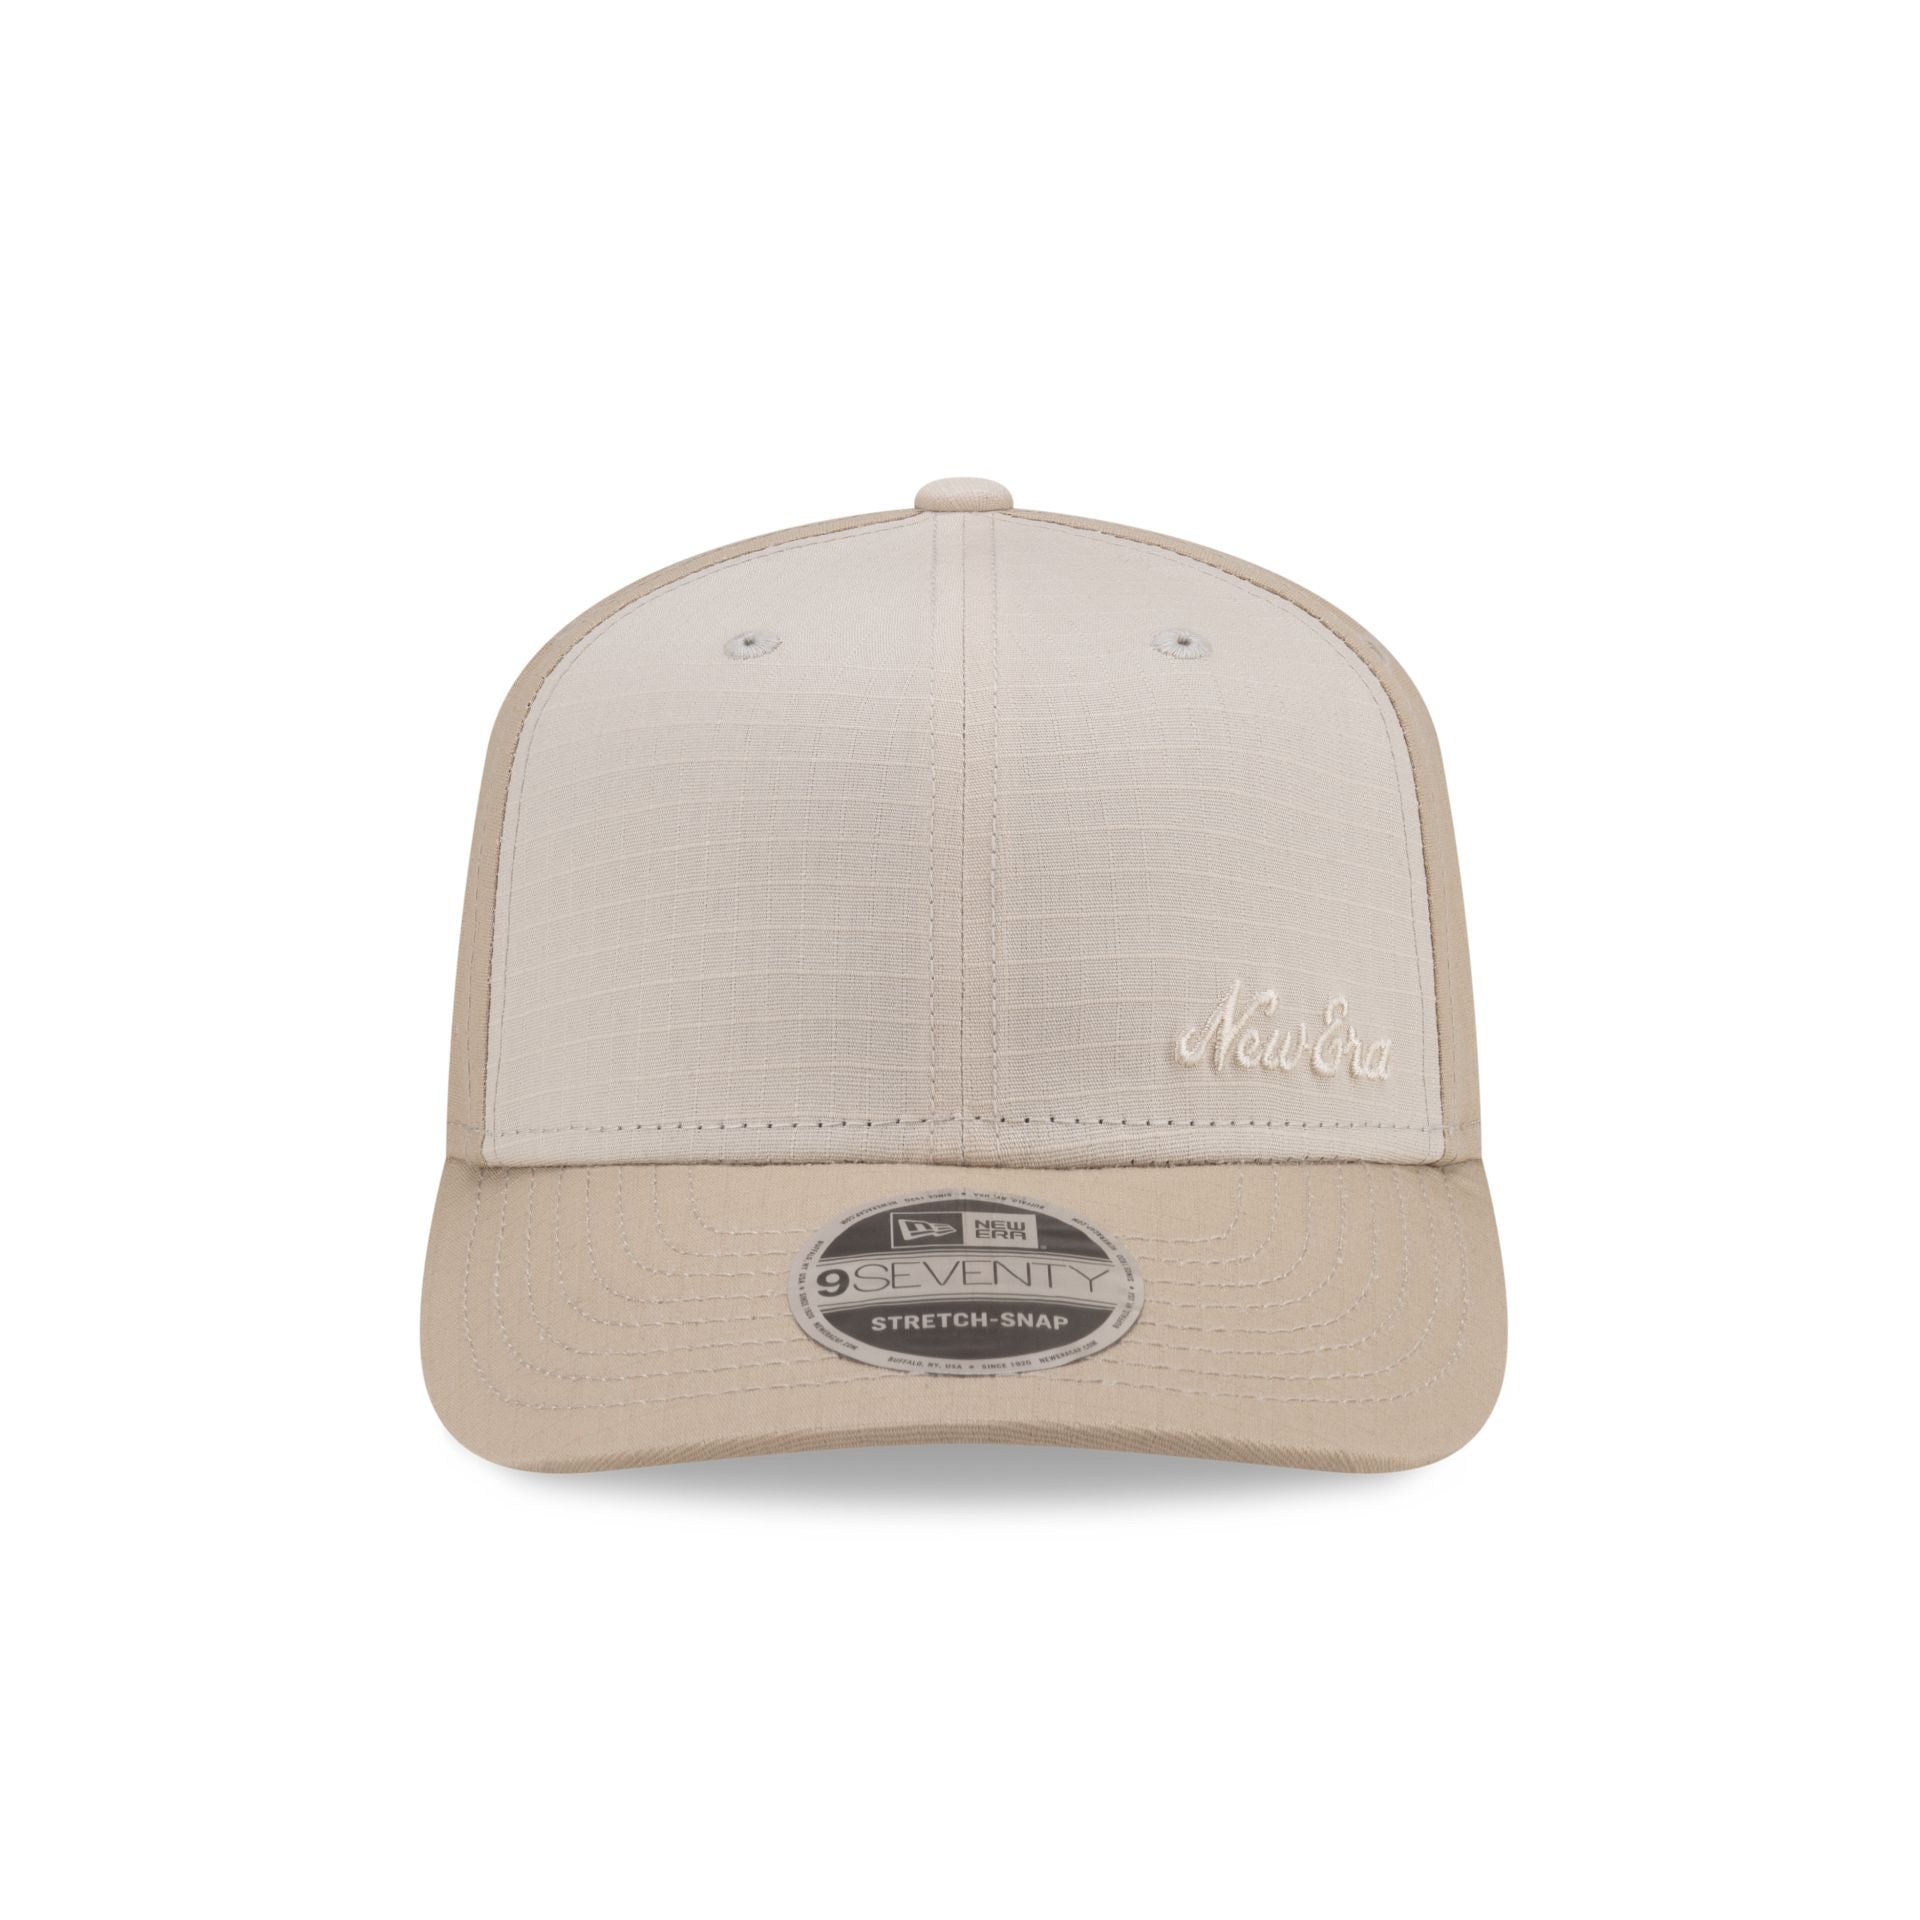 New Era Cap Tan Cotton Ripstop 9SEVENTY Adjustable Hat